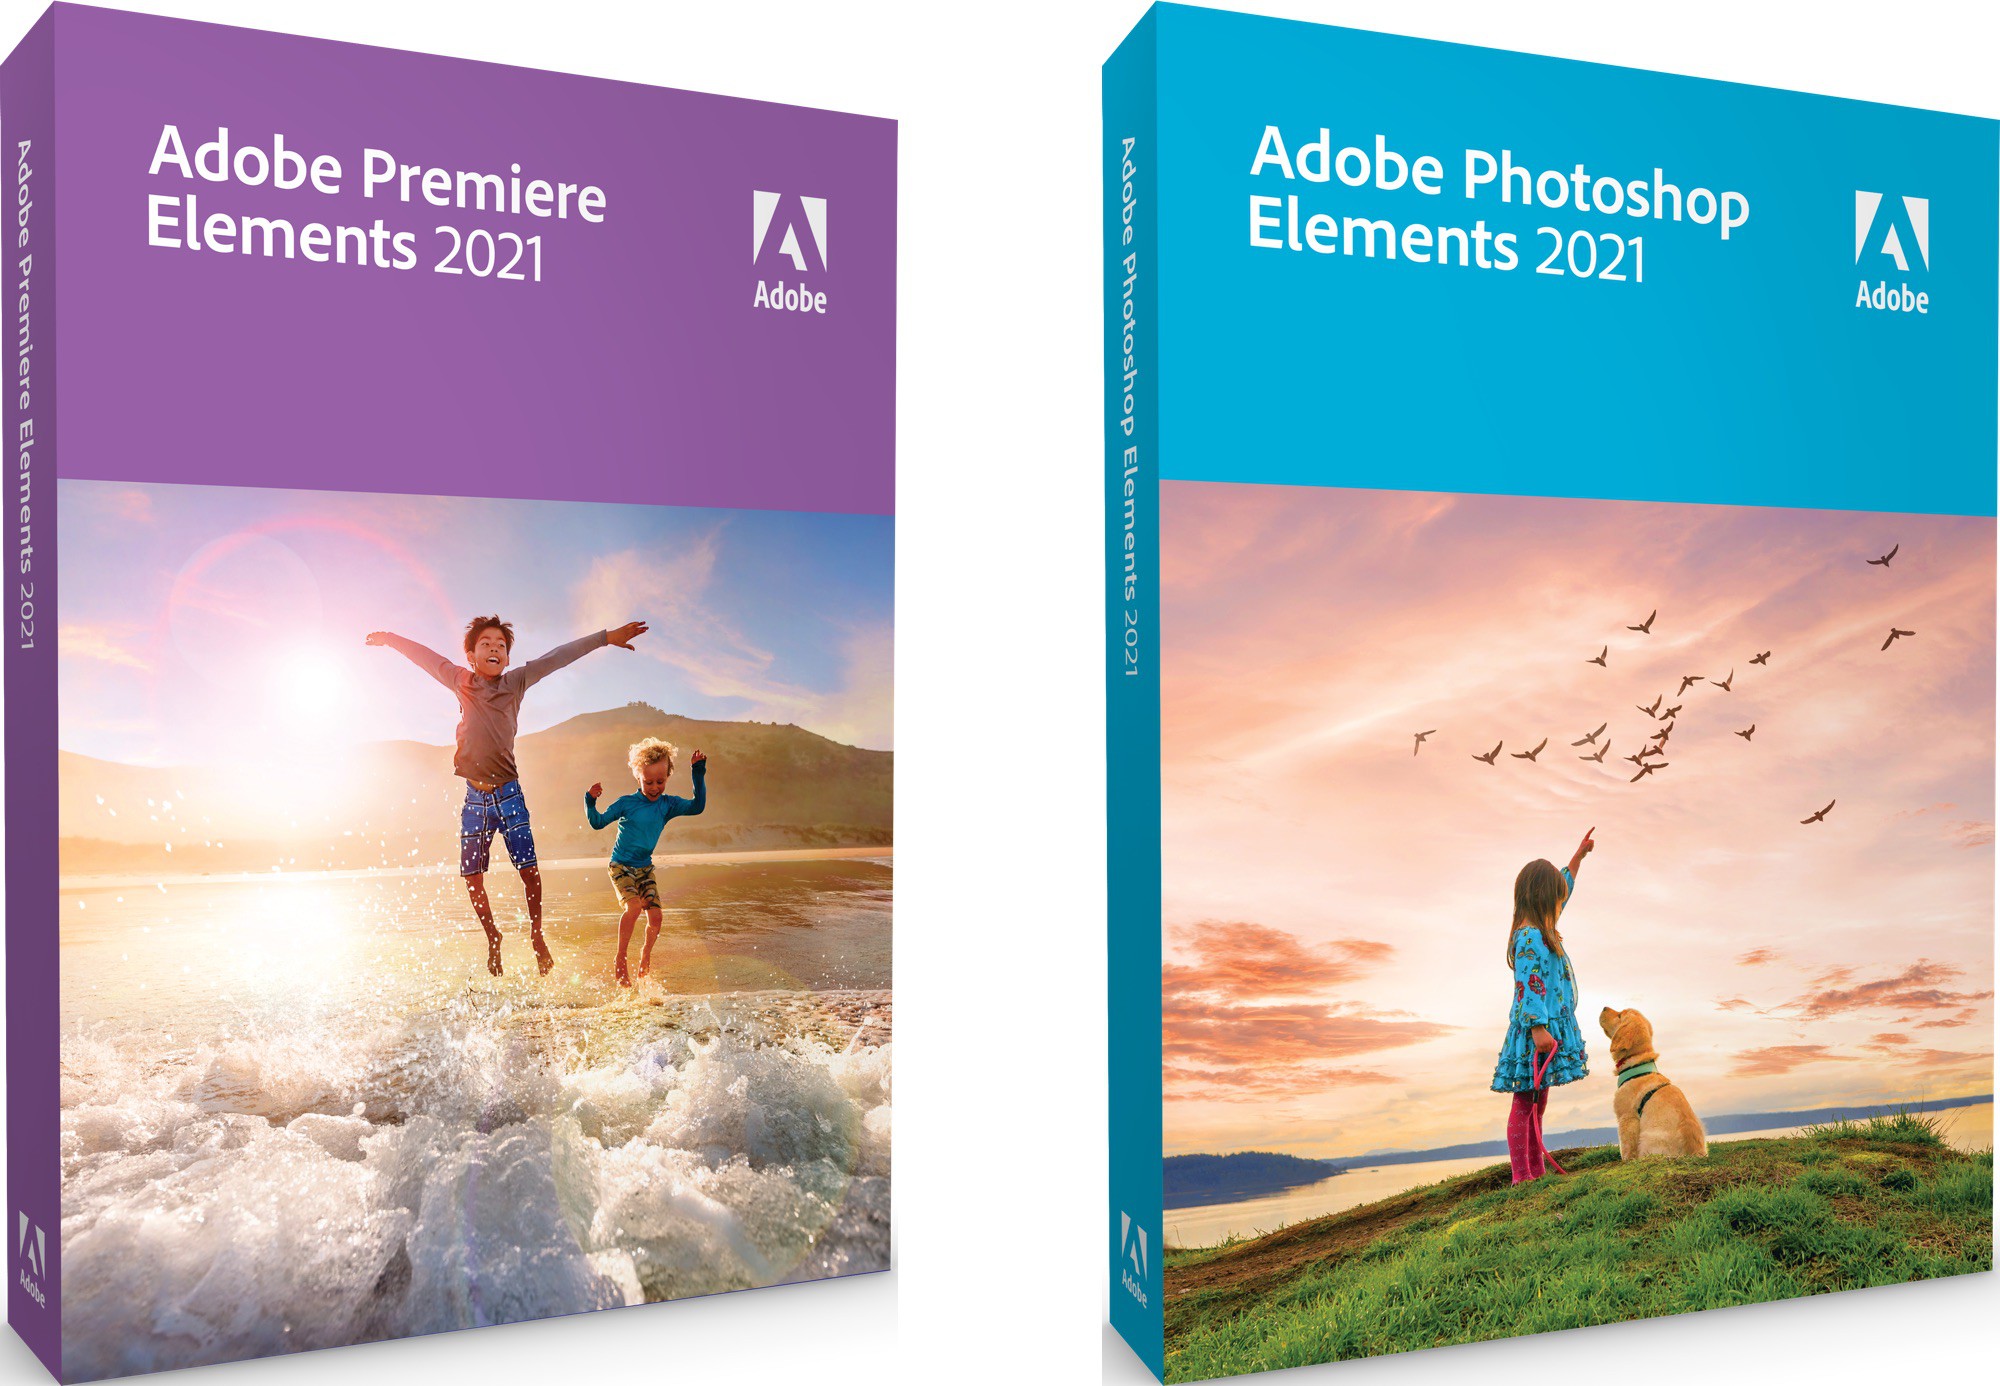 adobe photoshop elements 2020 and premiere elements 2020